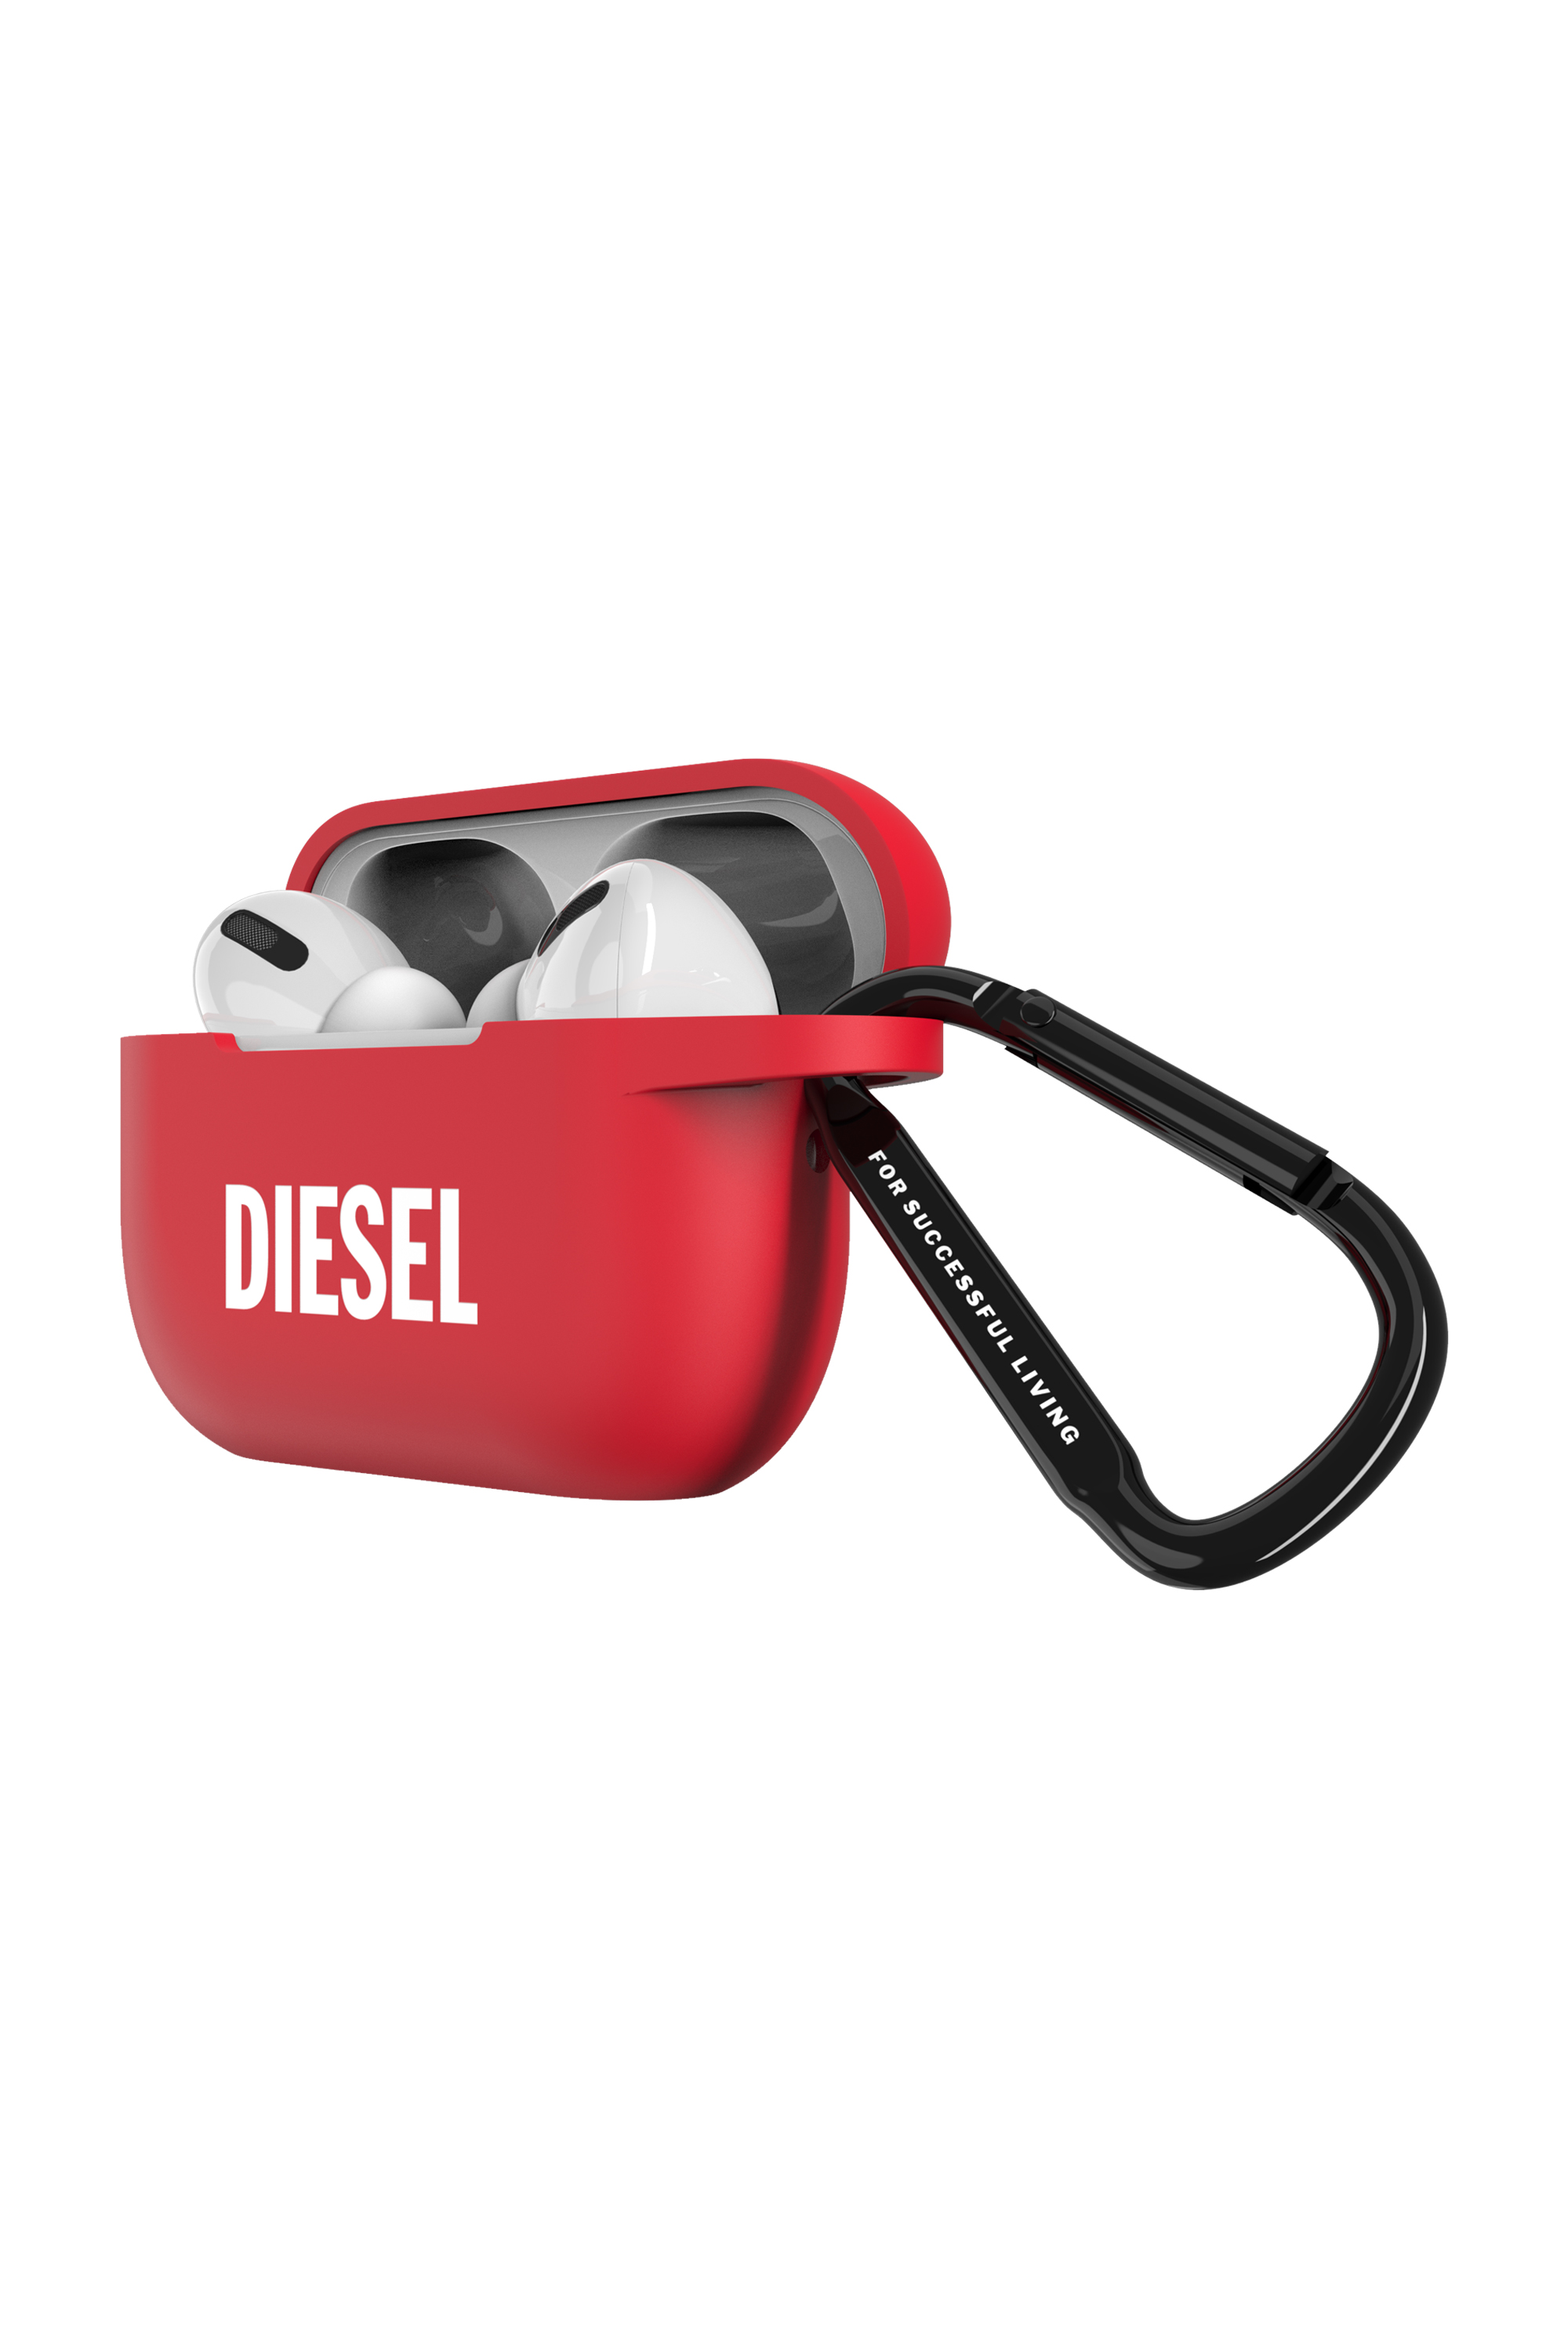 Diesel - 52956 AIRPOD CASE, Red - Image 3